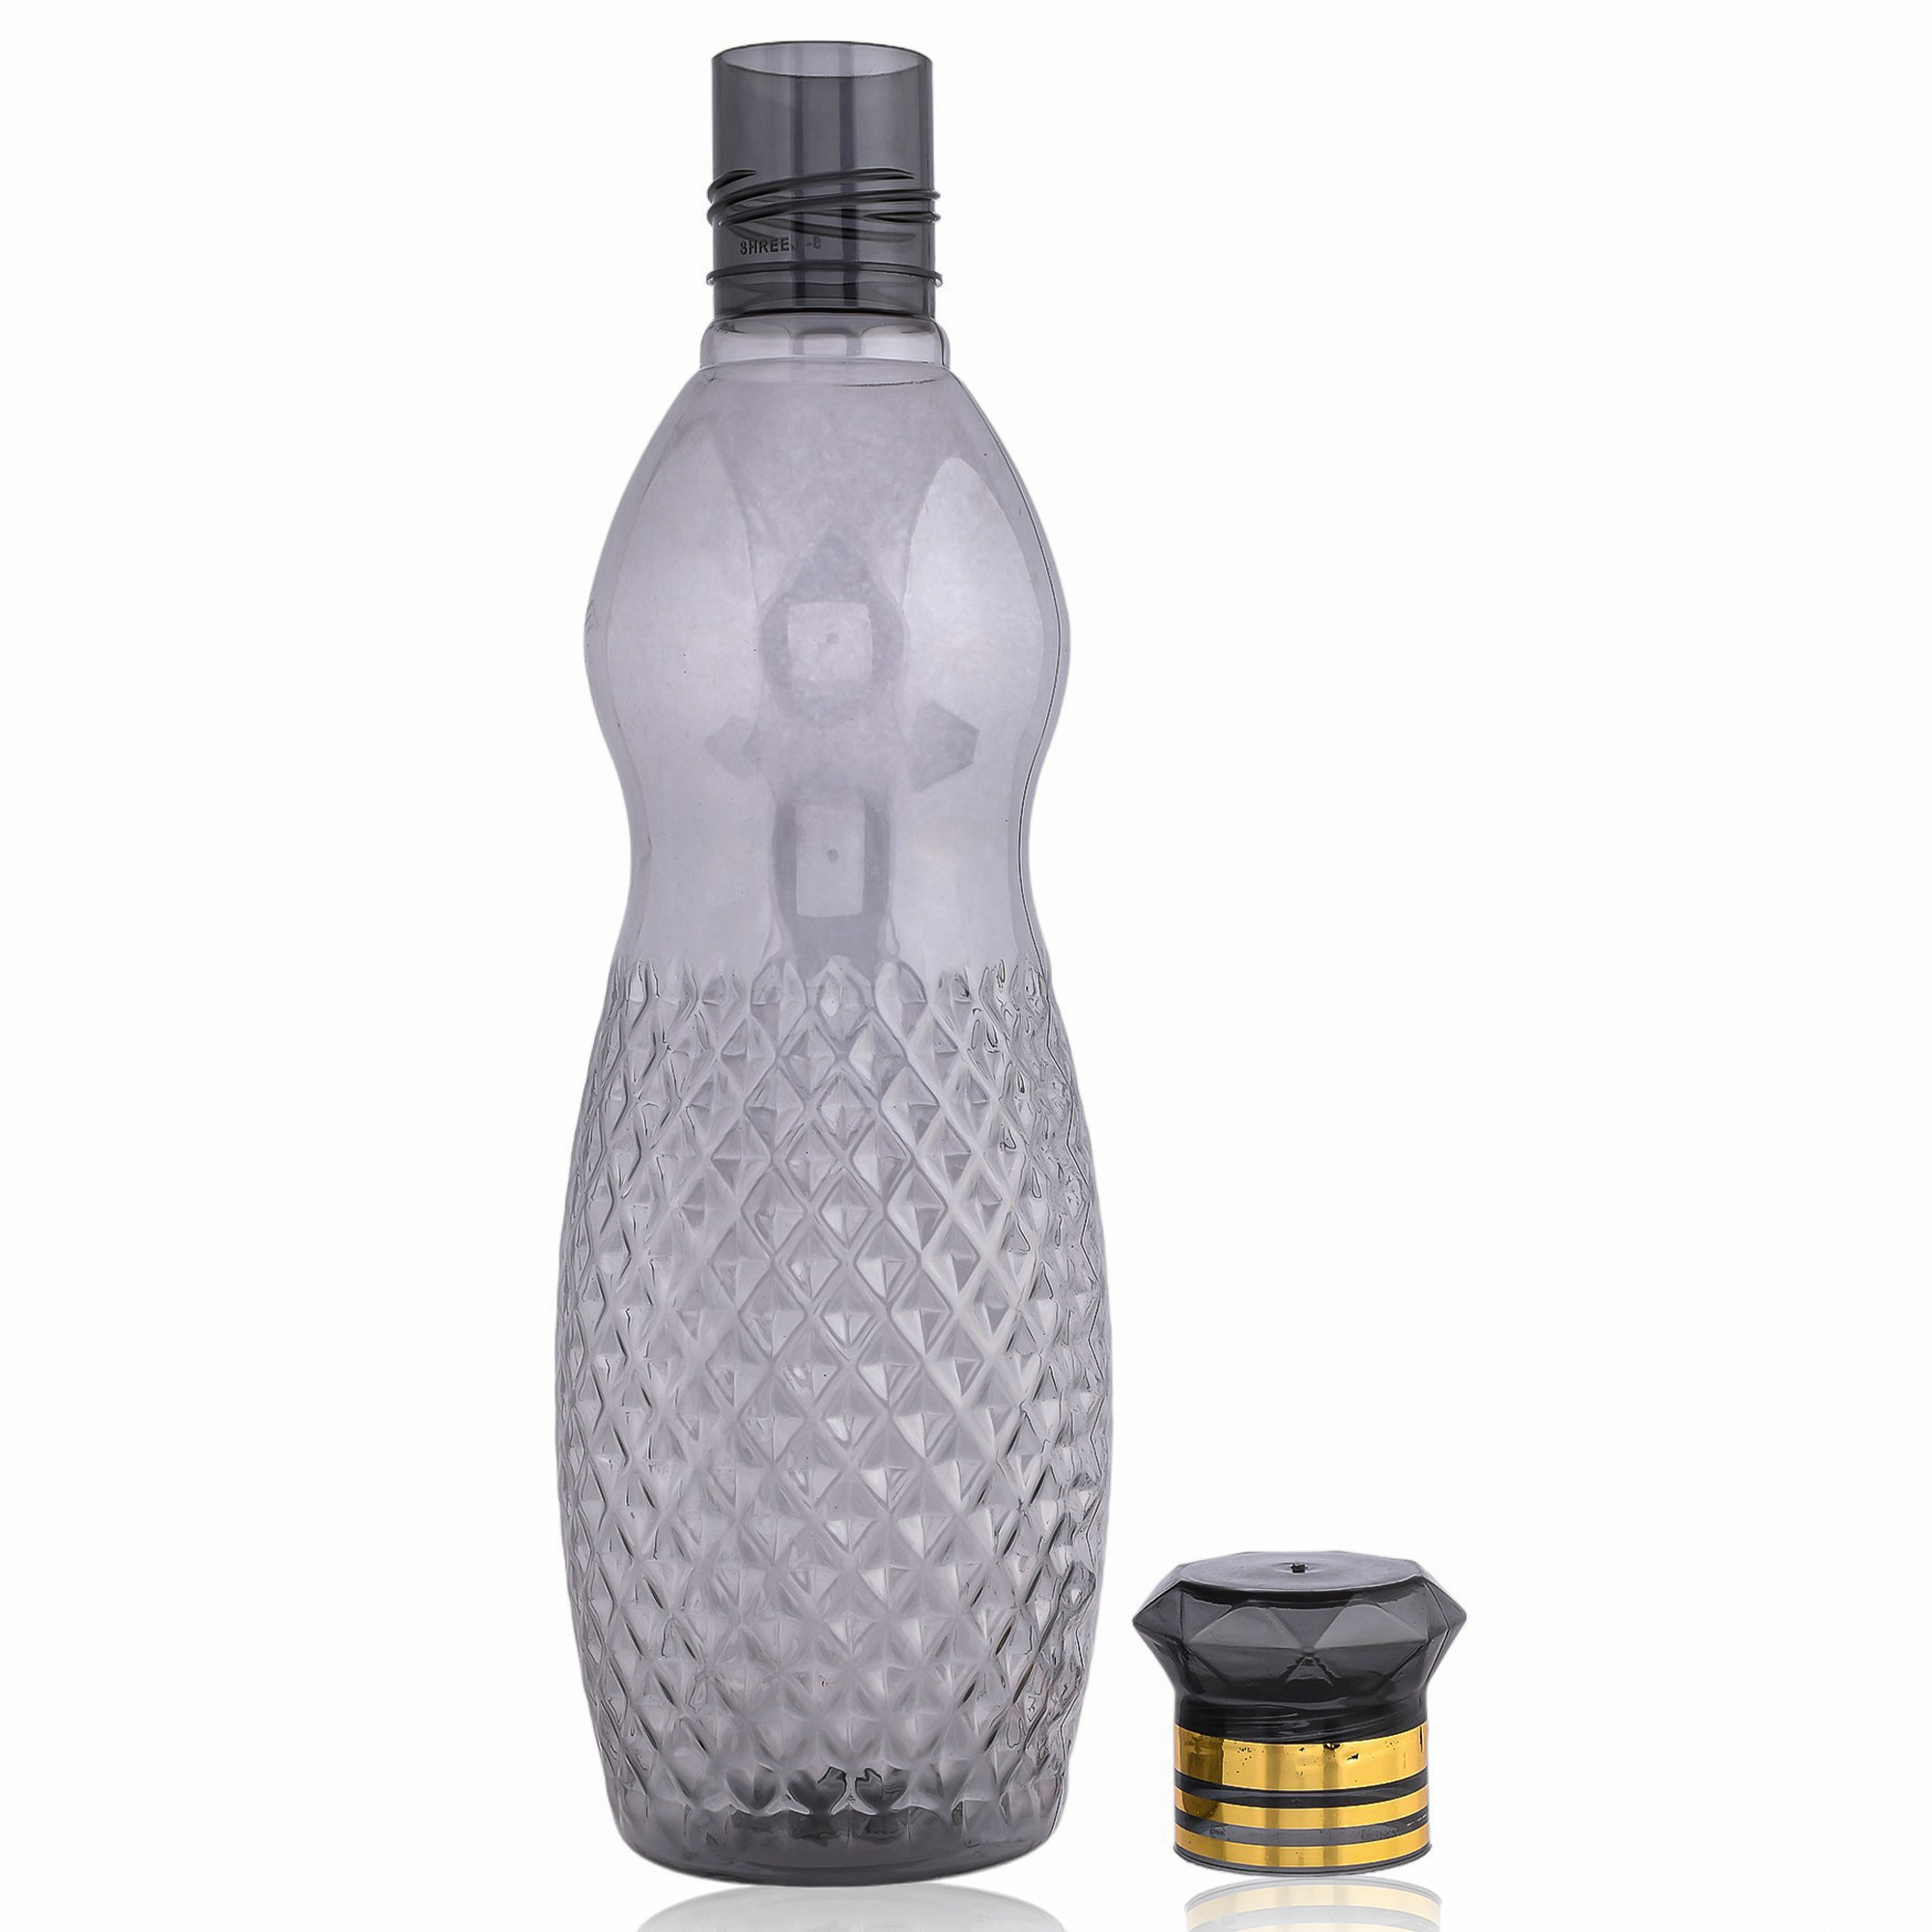 Kuber Industries Water Bottle | Plastic Water Bottle for Fridge | Water Bottle for Kitchen | Ideal for Restaurant | Water Bottle for Refrigerator | Dolphine Bottle | 1 LTR |Black